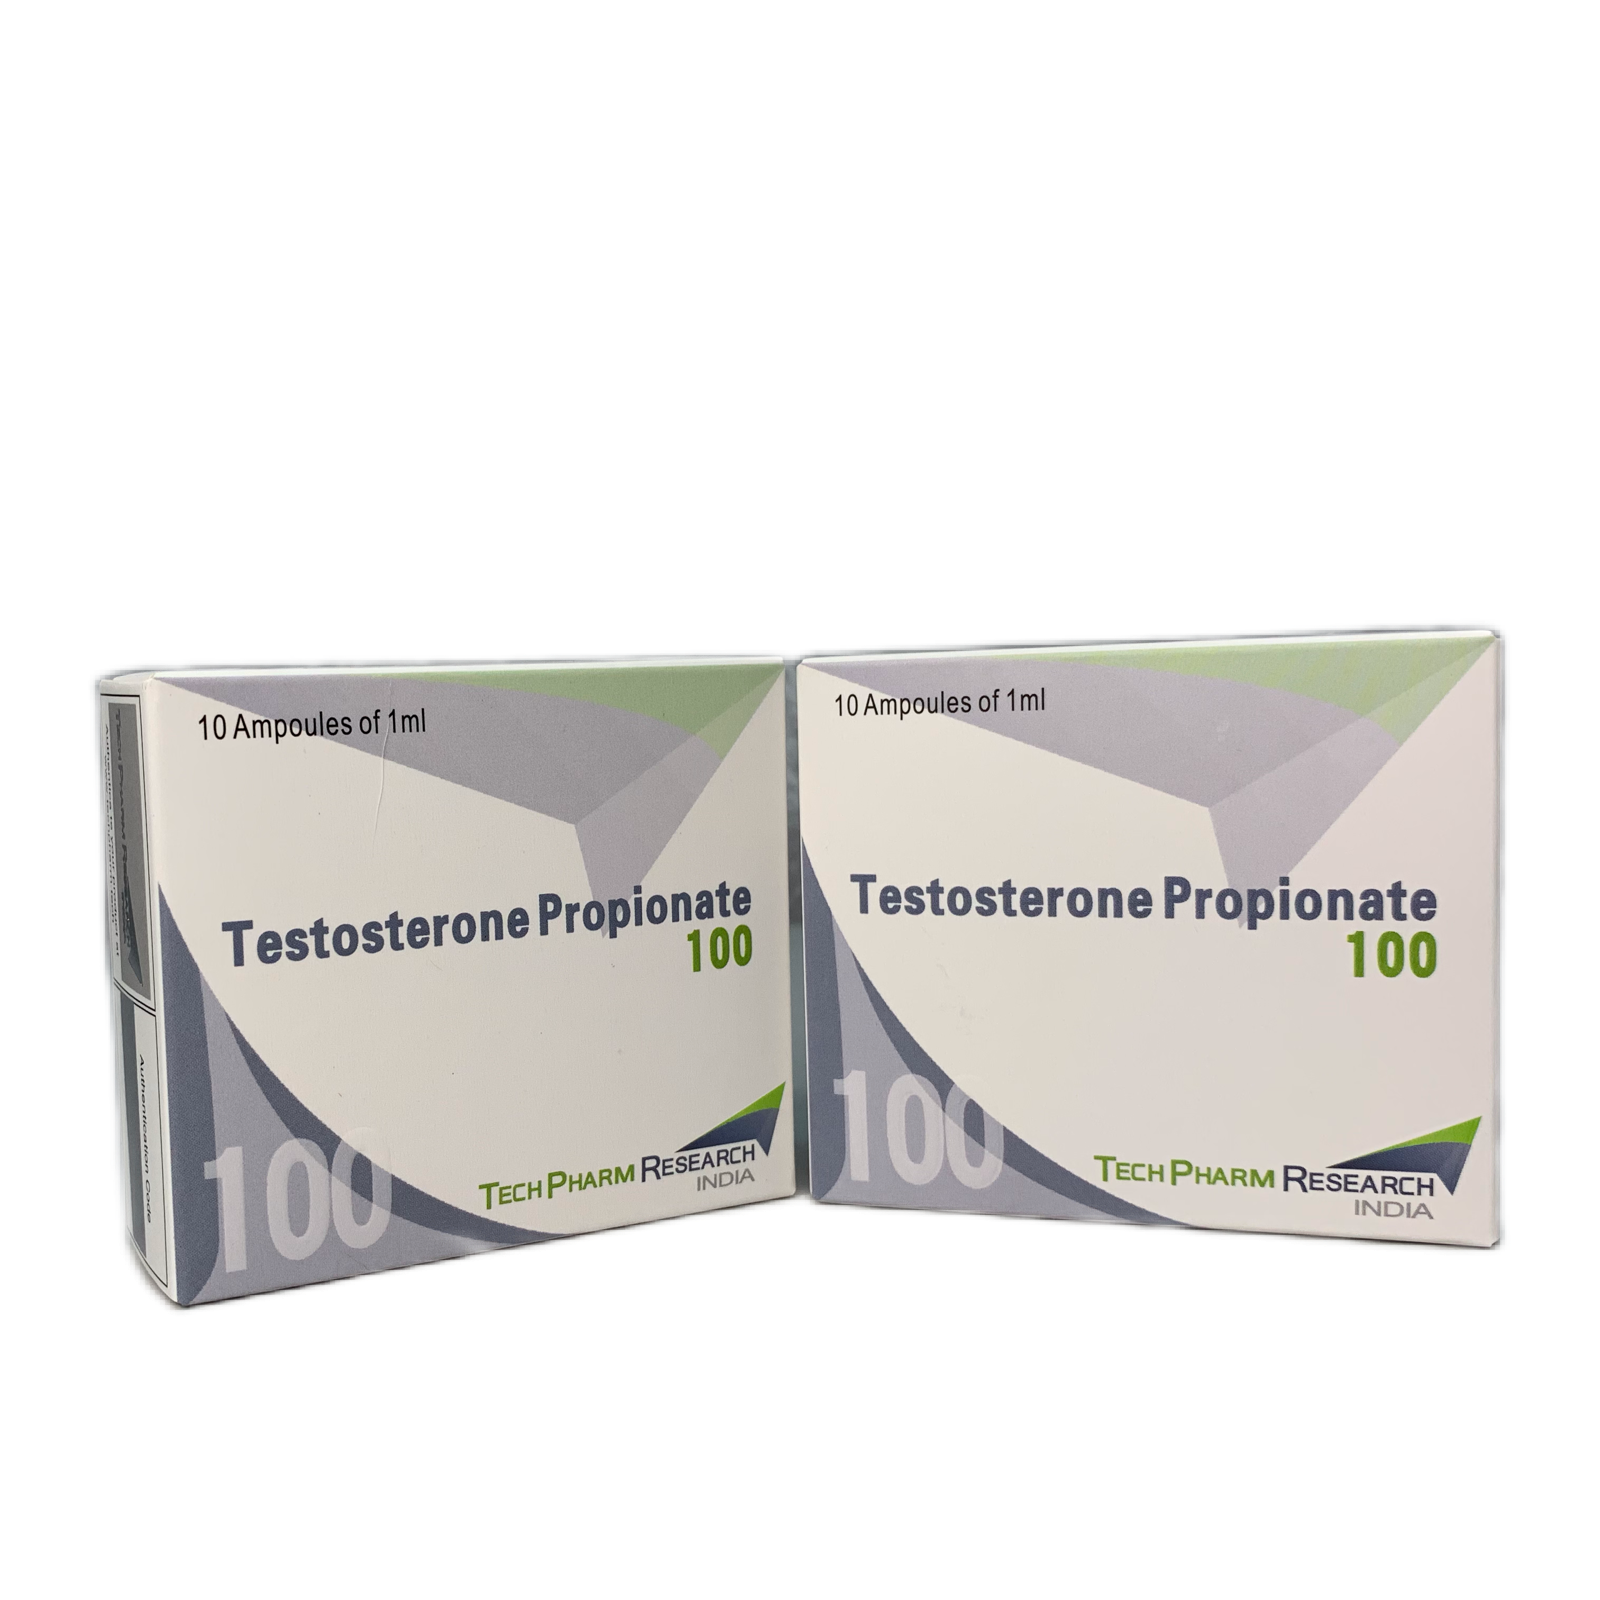 Testesterone prop 100 (TechPharm)